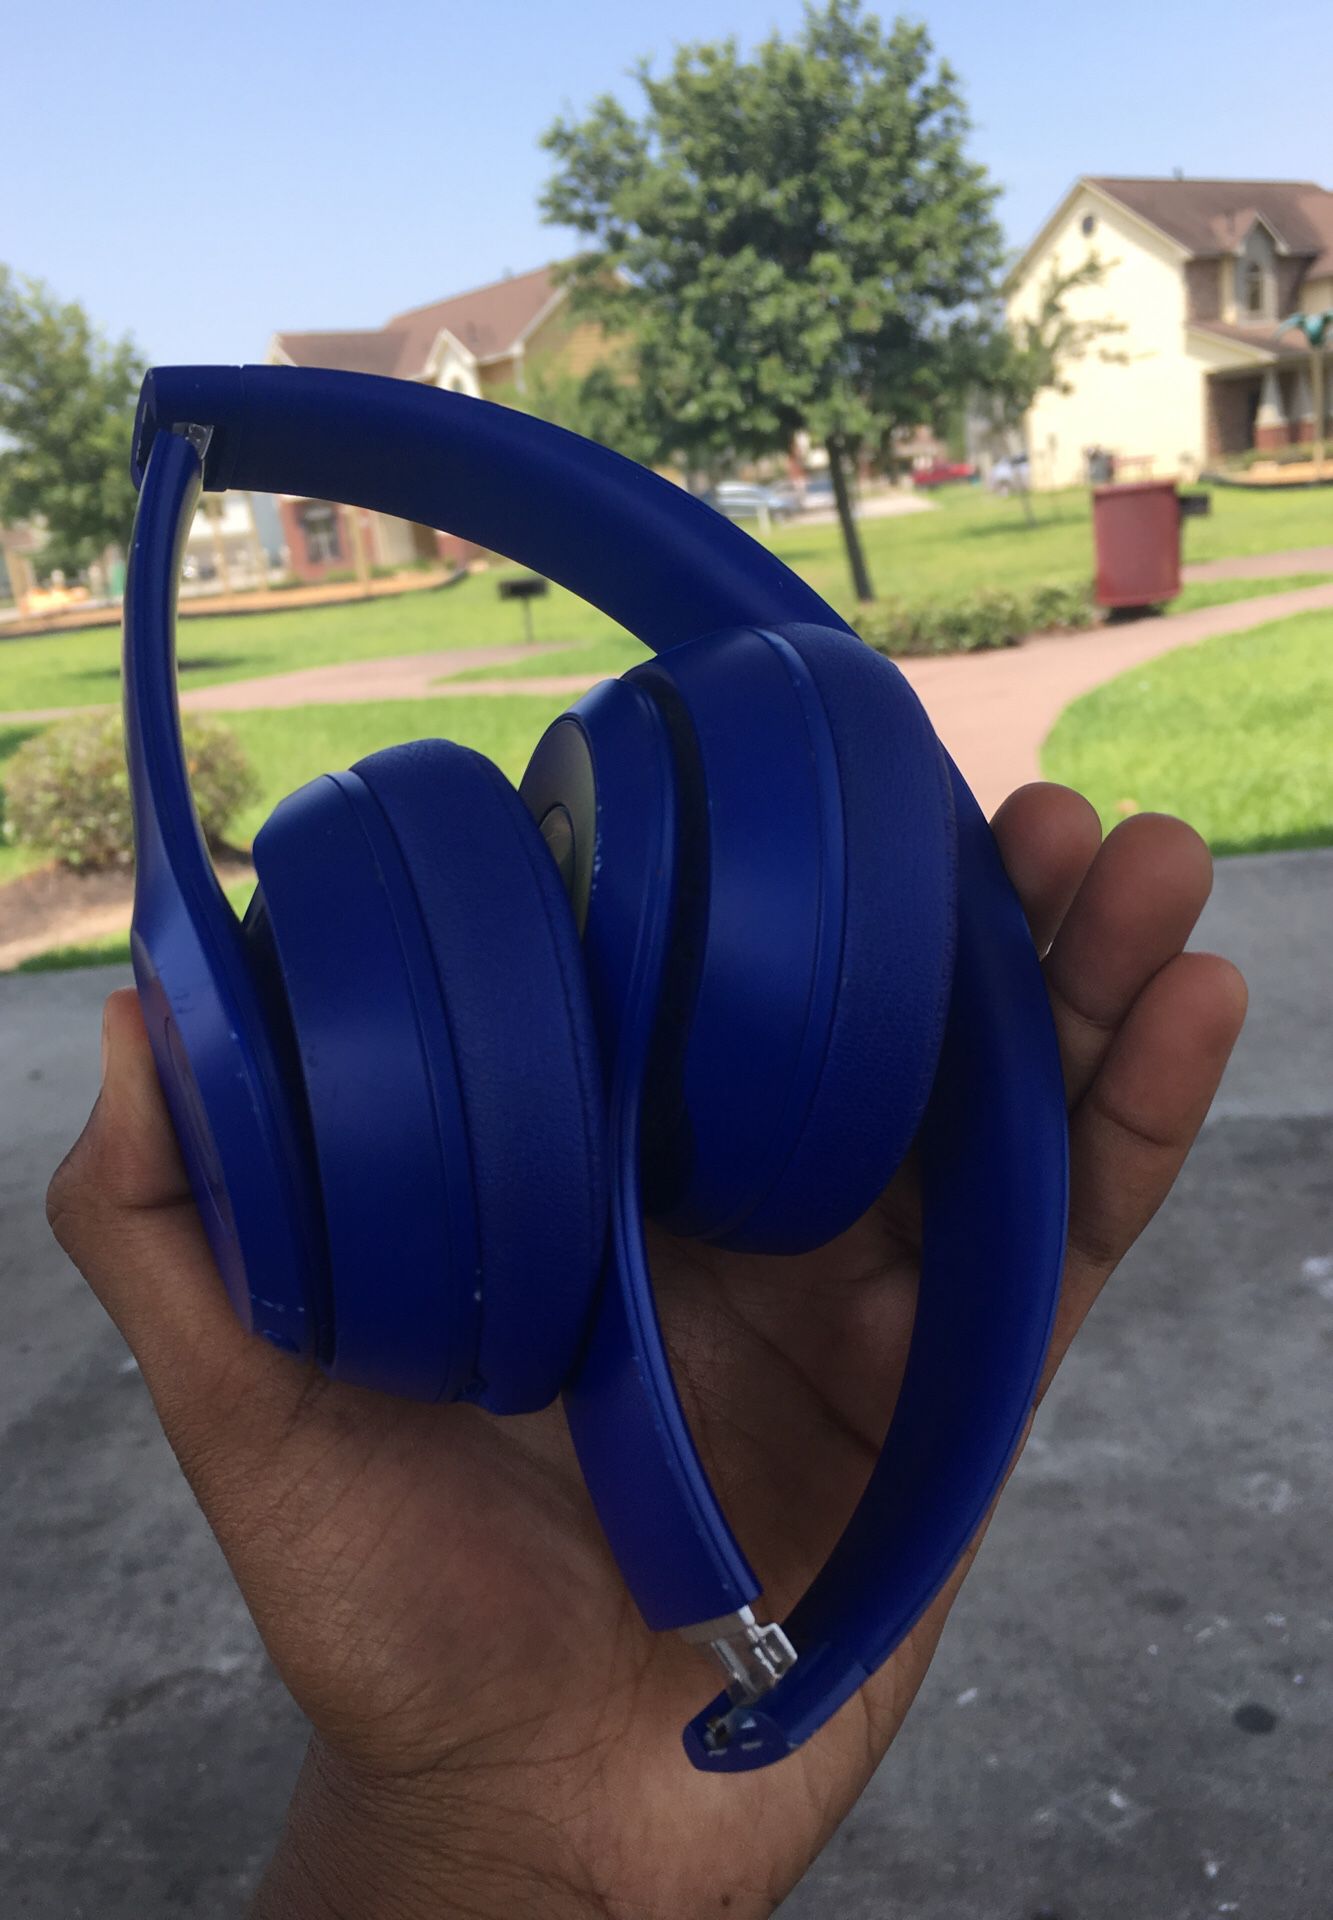 blue beats solo 3s